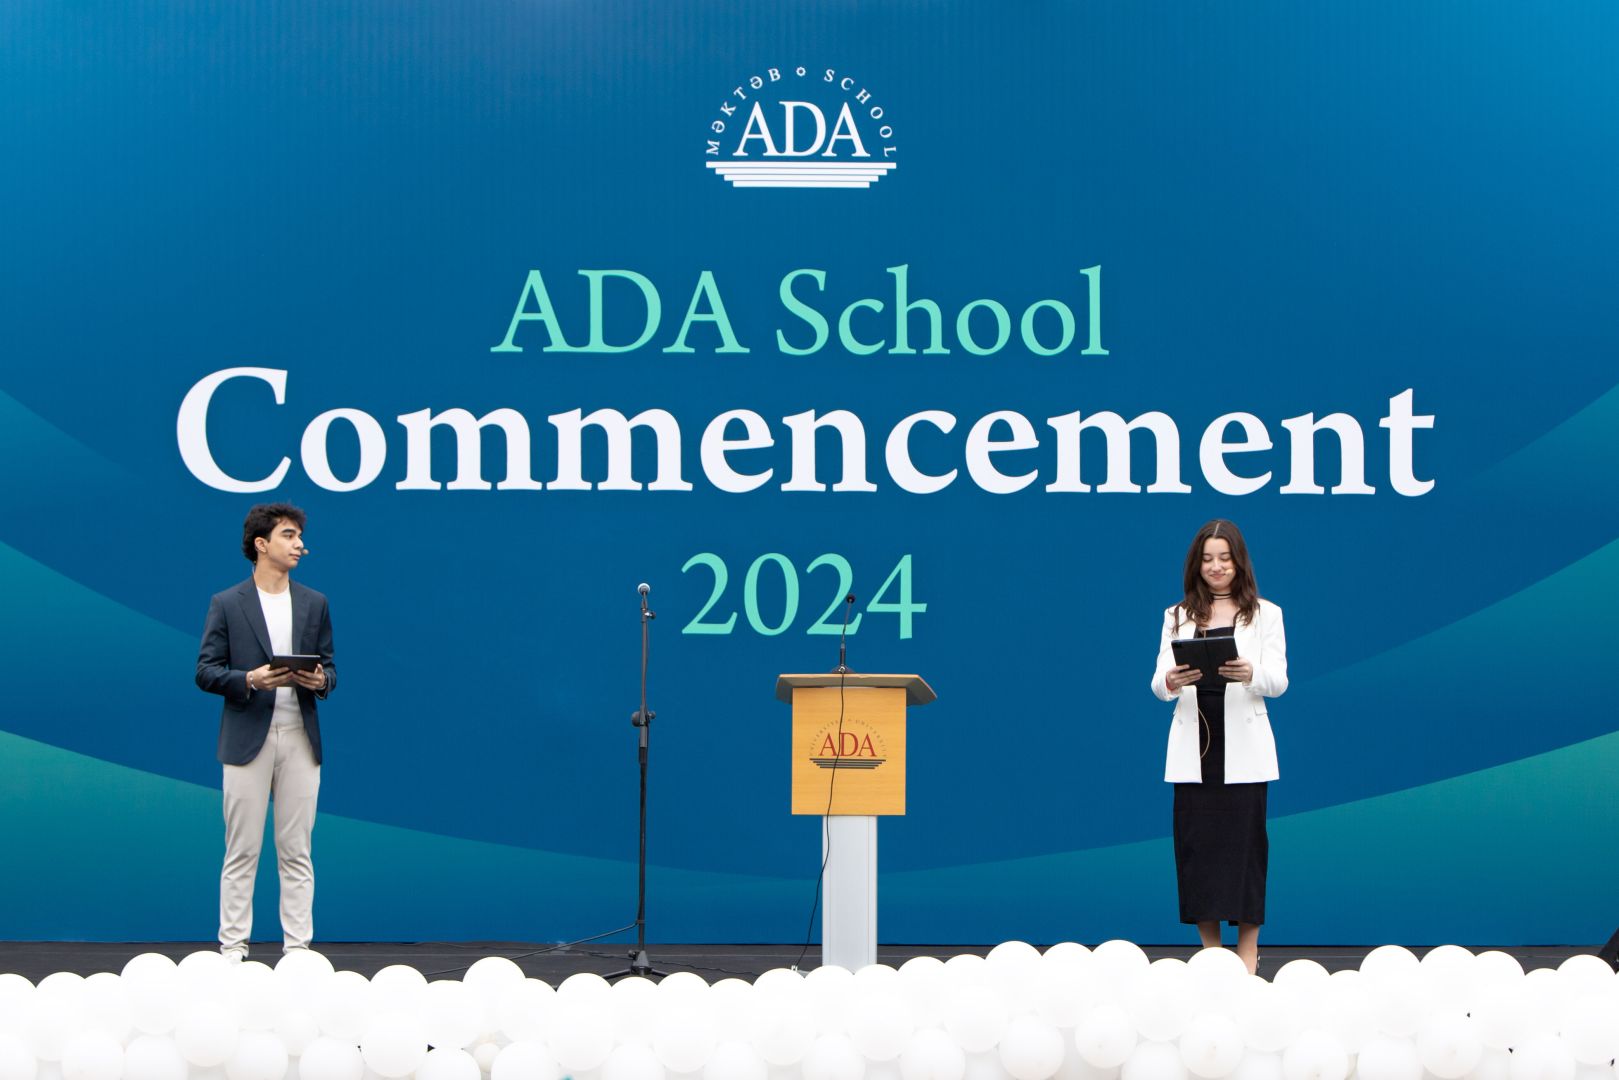 ADA School celebrates Graduation Day with festive ceremony [PHOTOS]